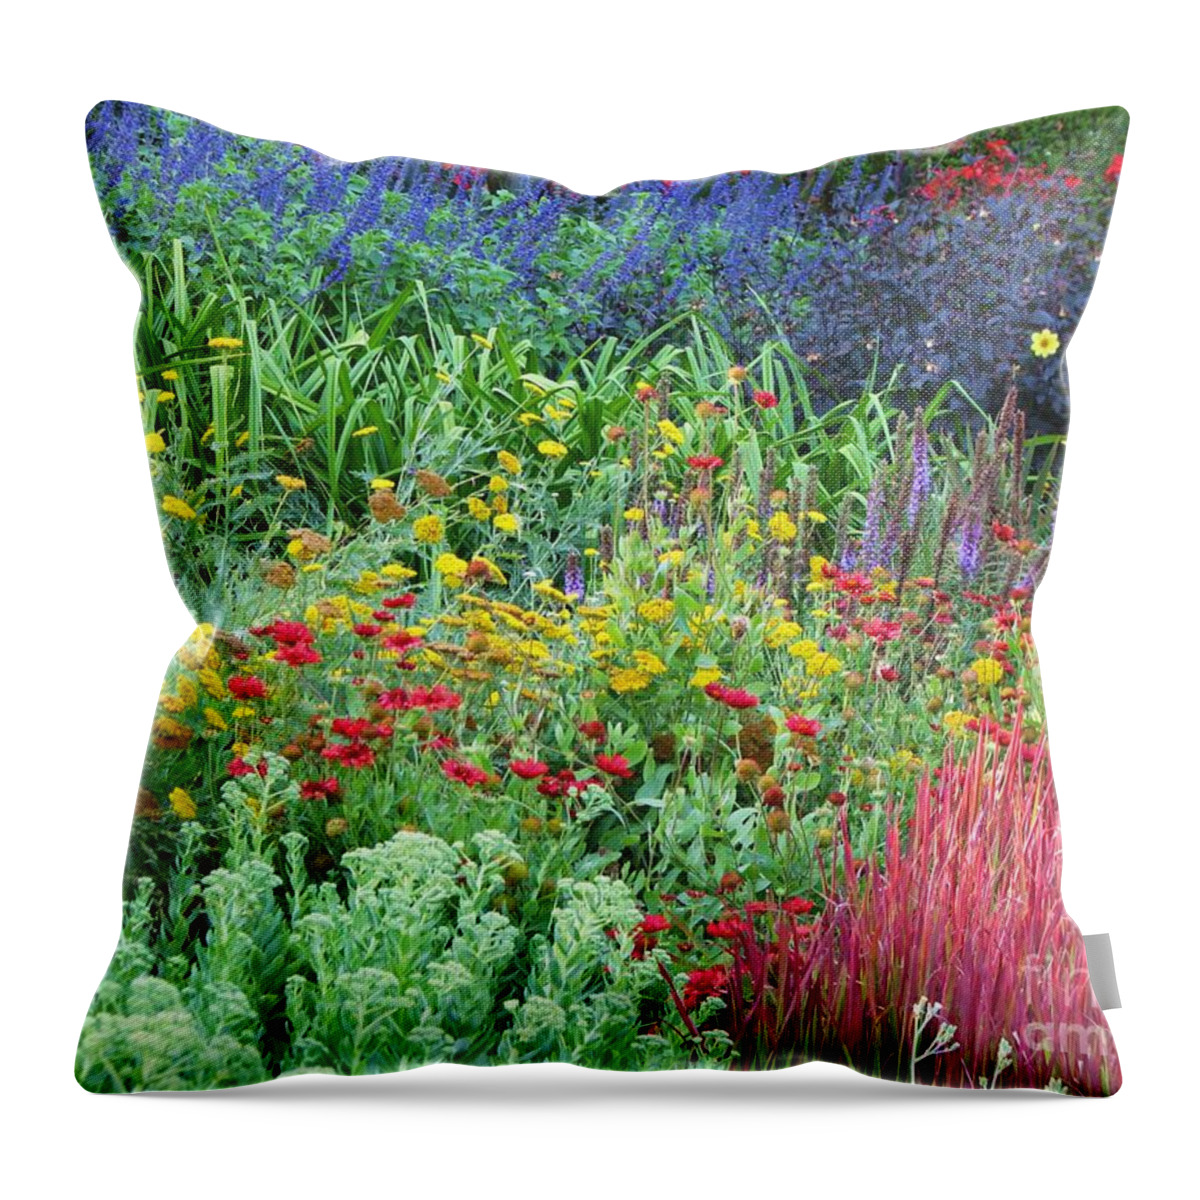 Garden Throw Pillow featuring the photograph Rainbow Garden by Michele Penner